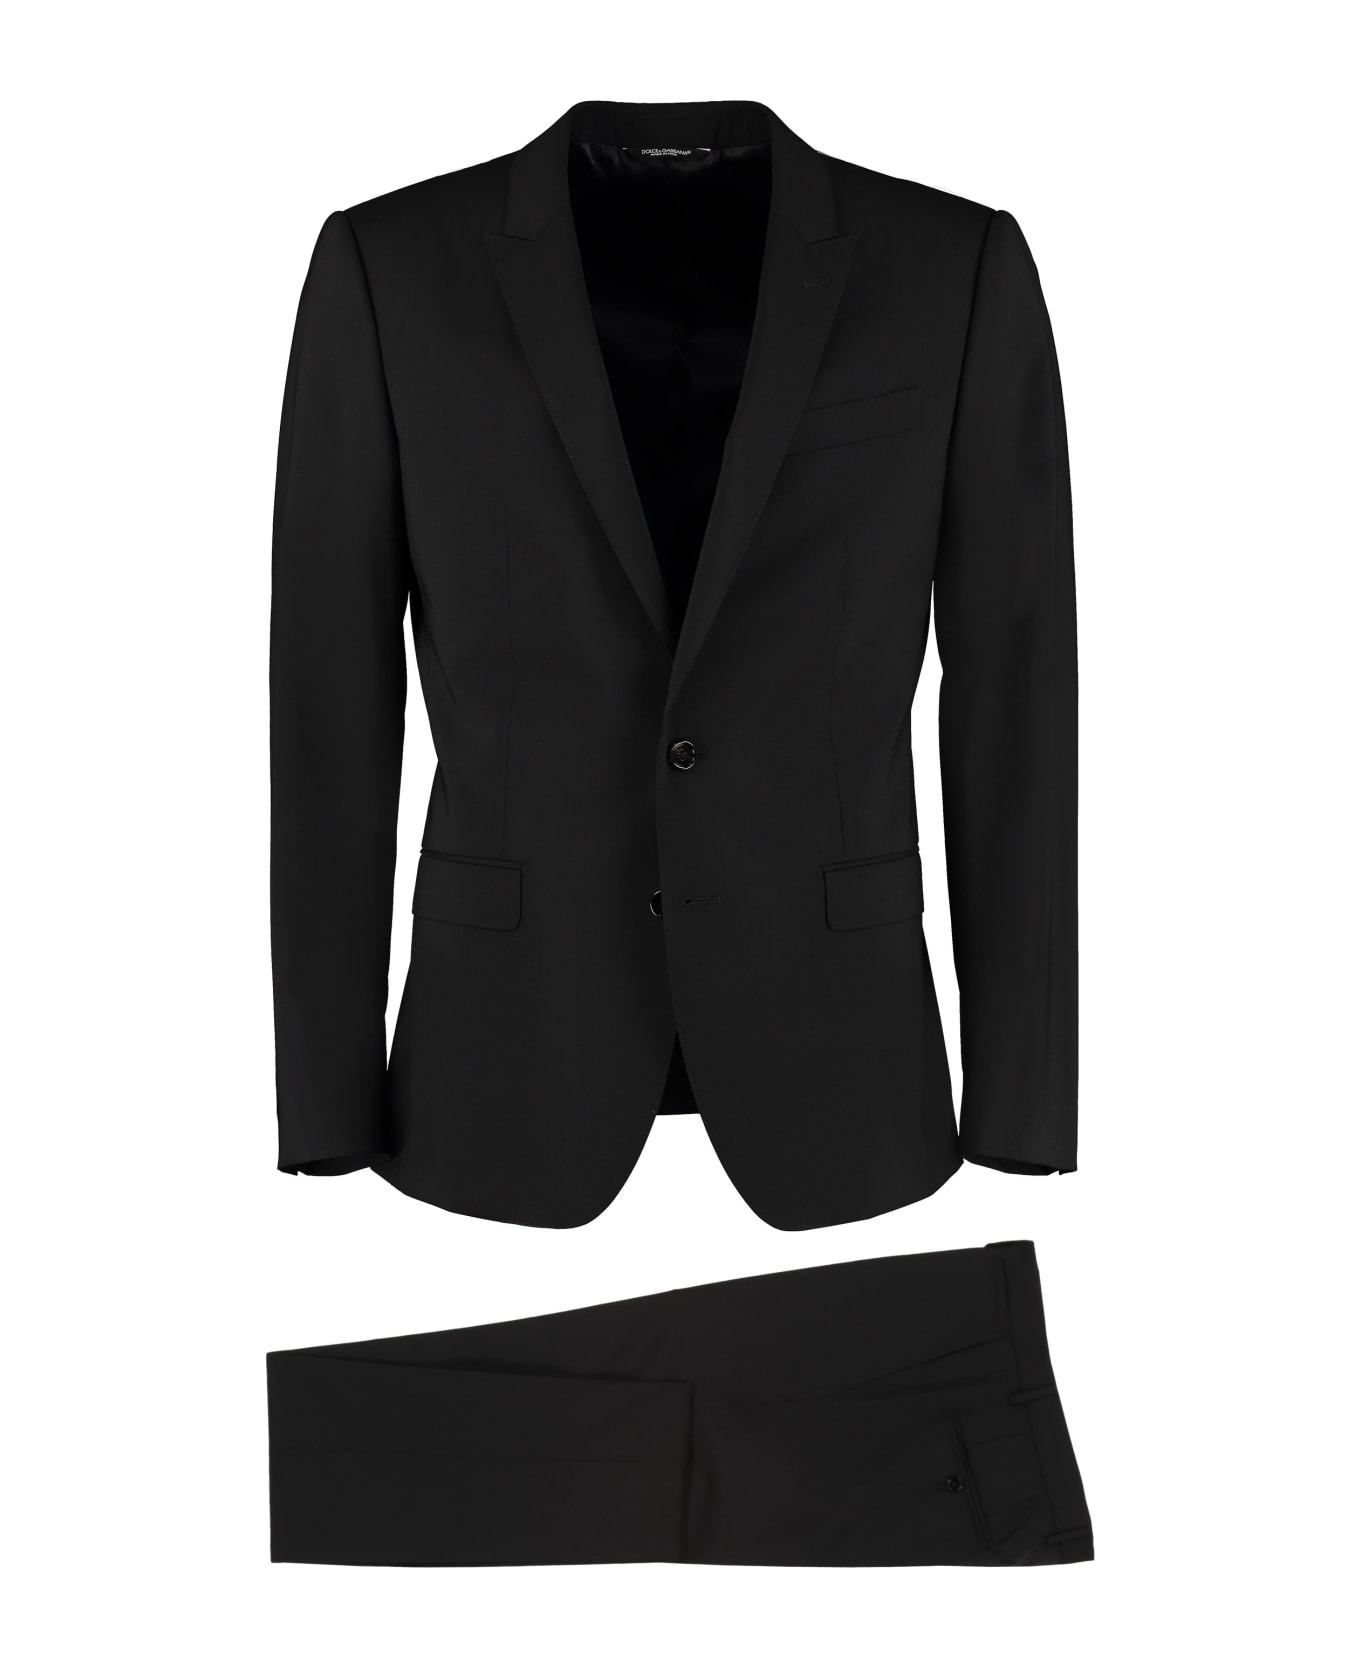 Dolce & Gabbana Martini Virgin Wool Suit - Nero スーツ